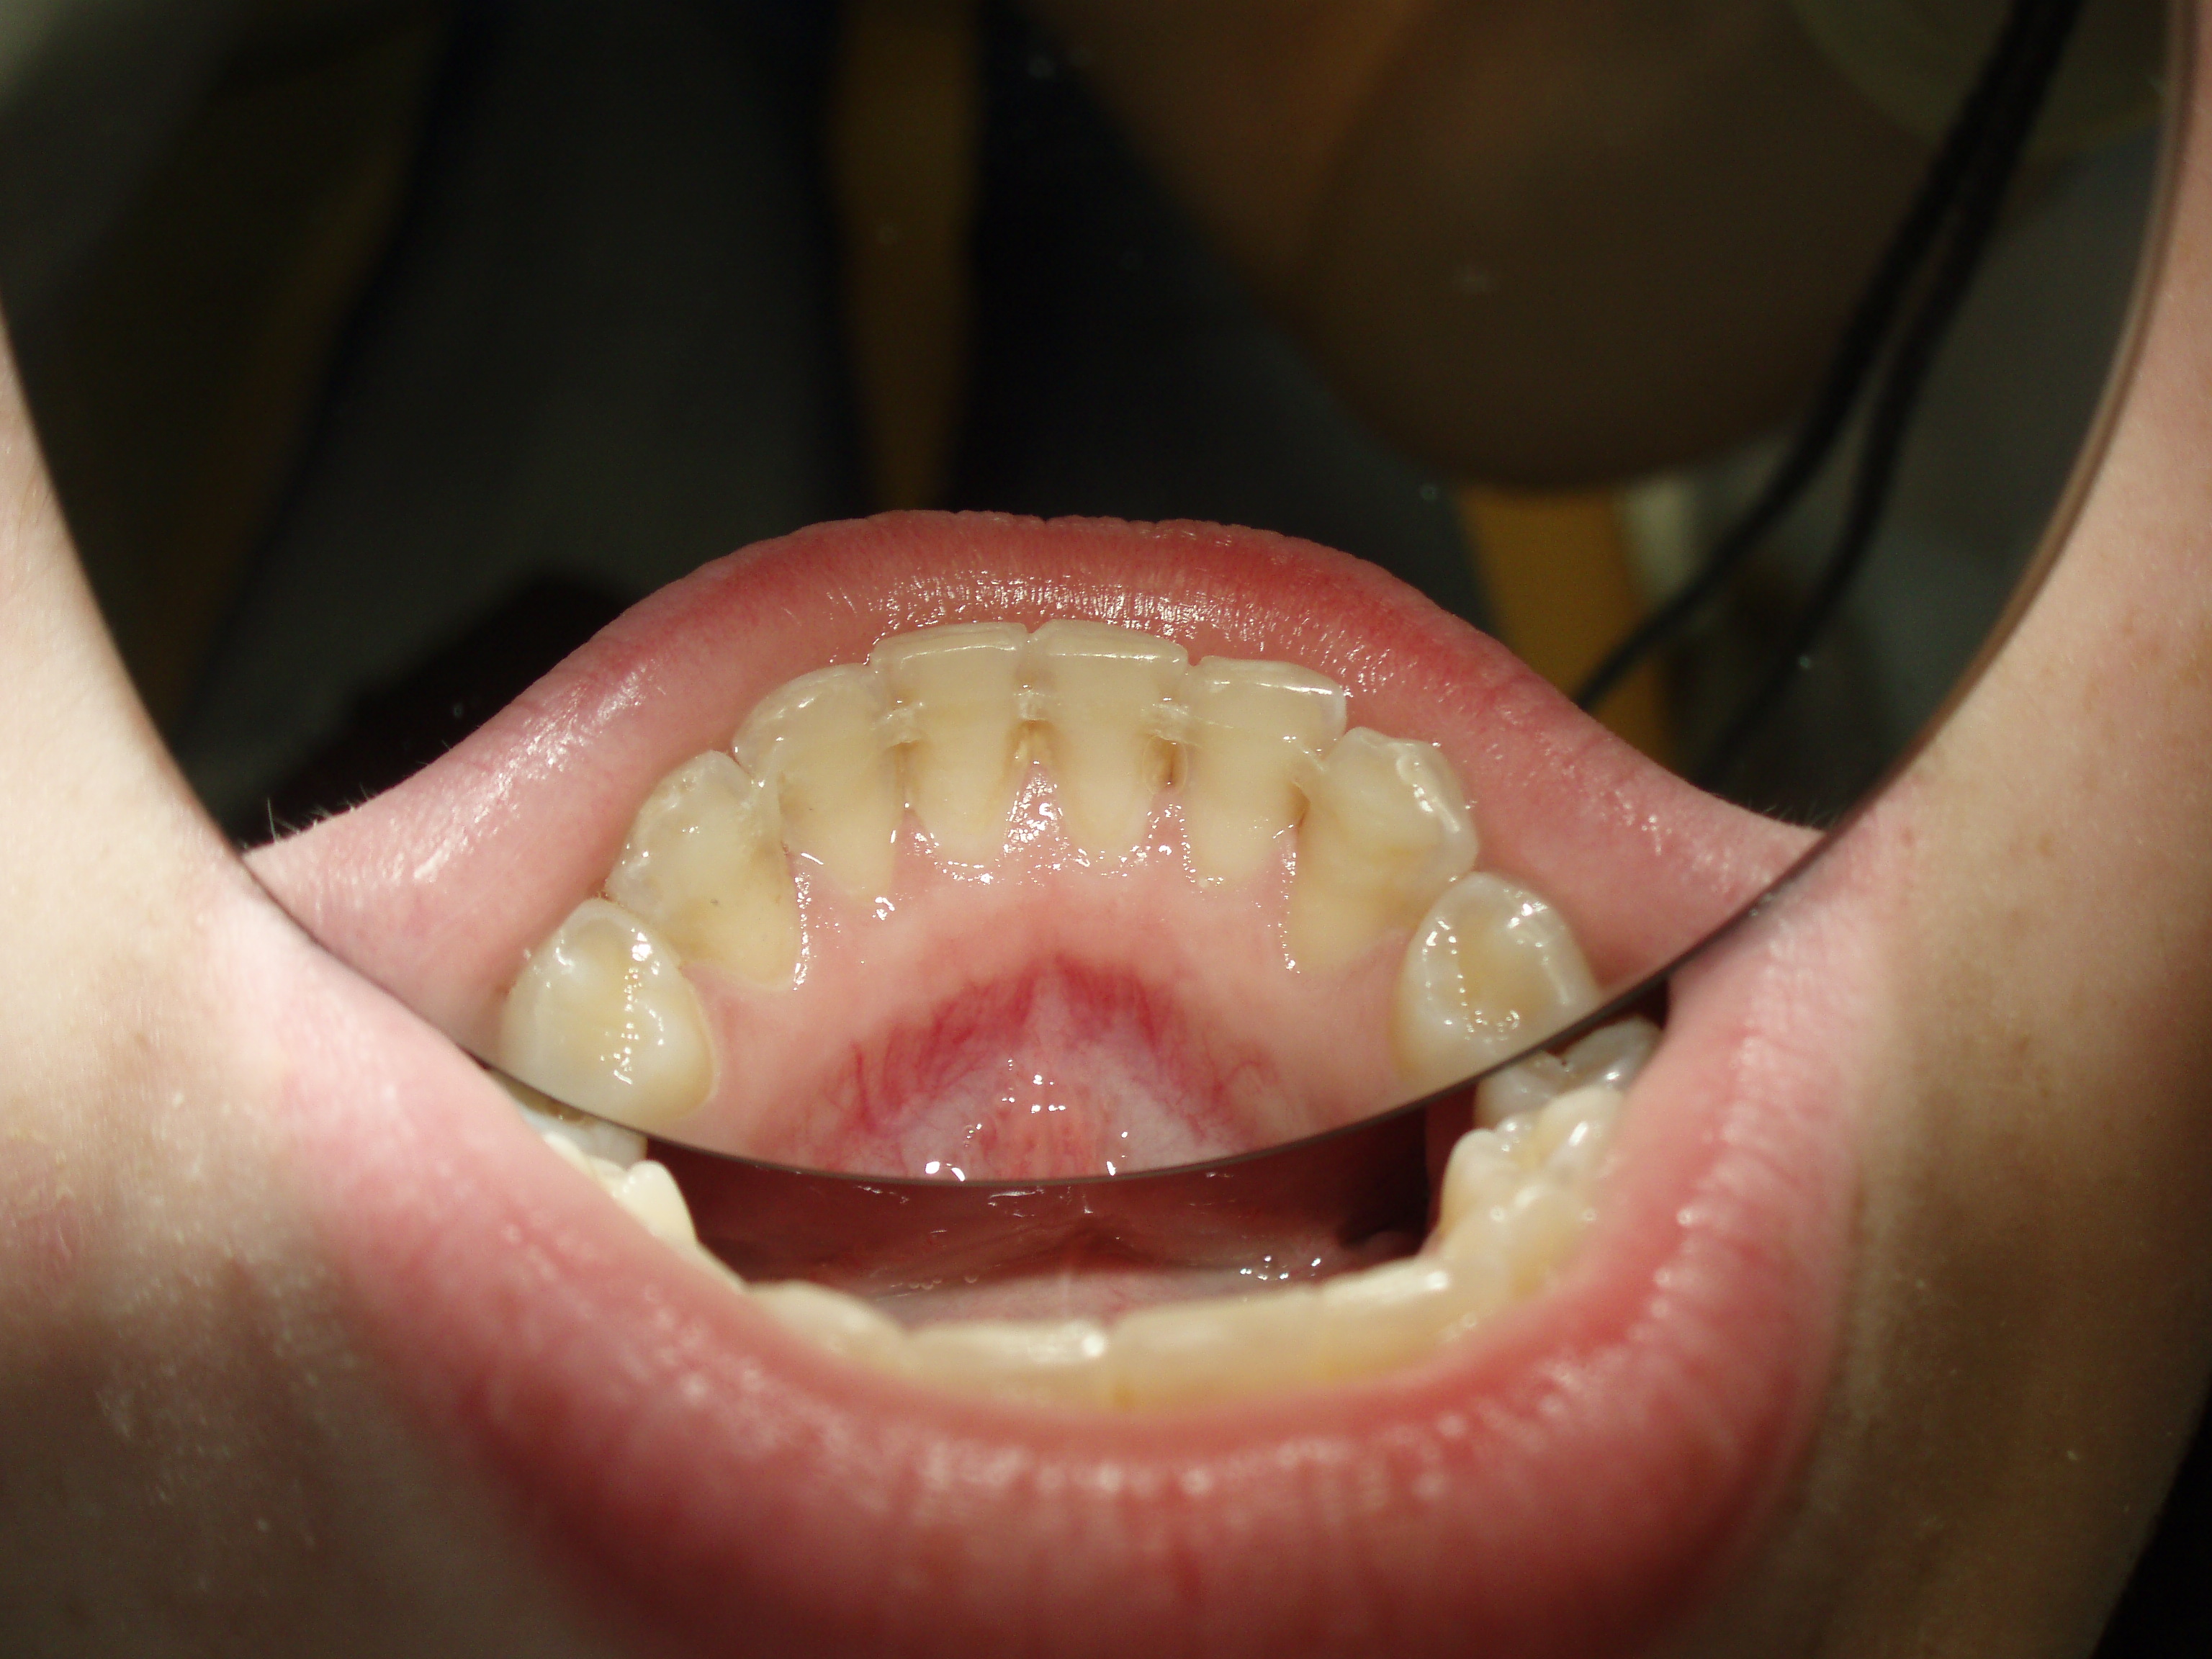 3. Post-orthodontic retainer; Courtesy of Dr. Fillipi, Czech Republic